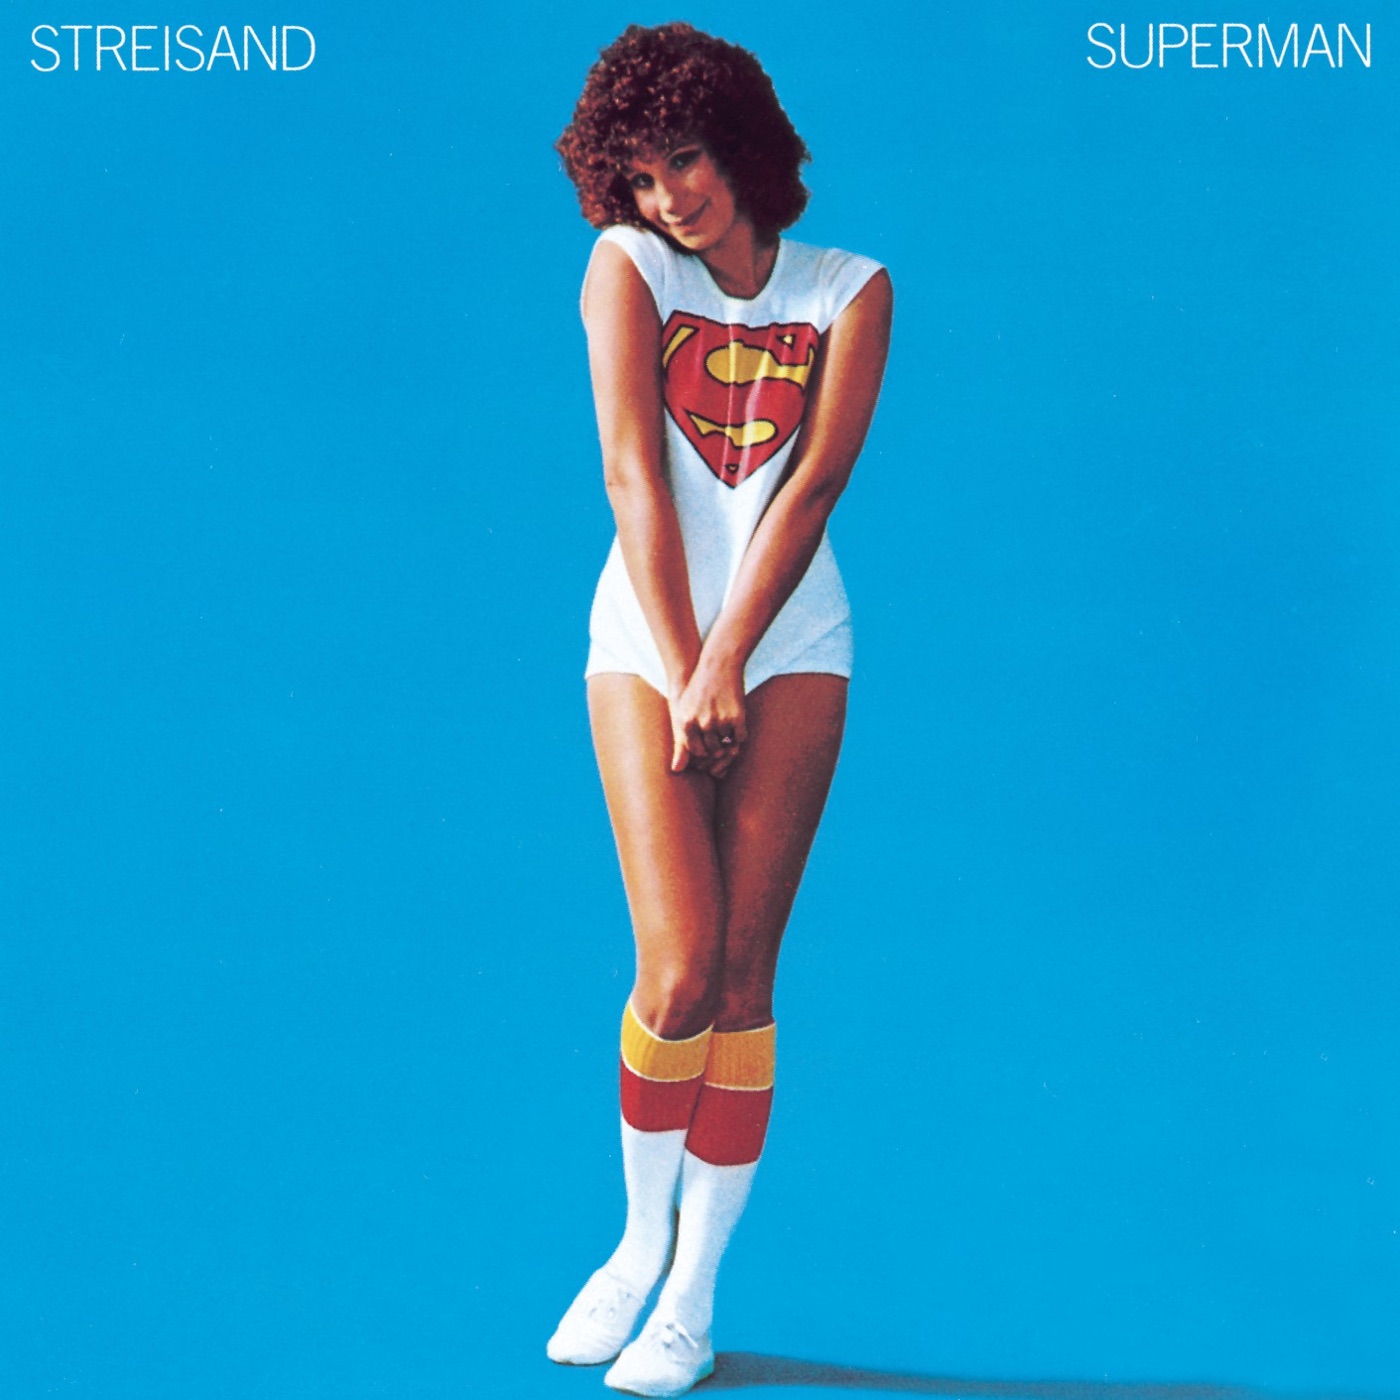 Superman by Barbra Streisand